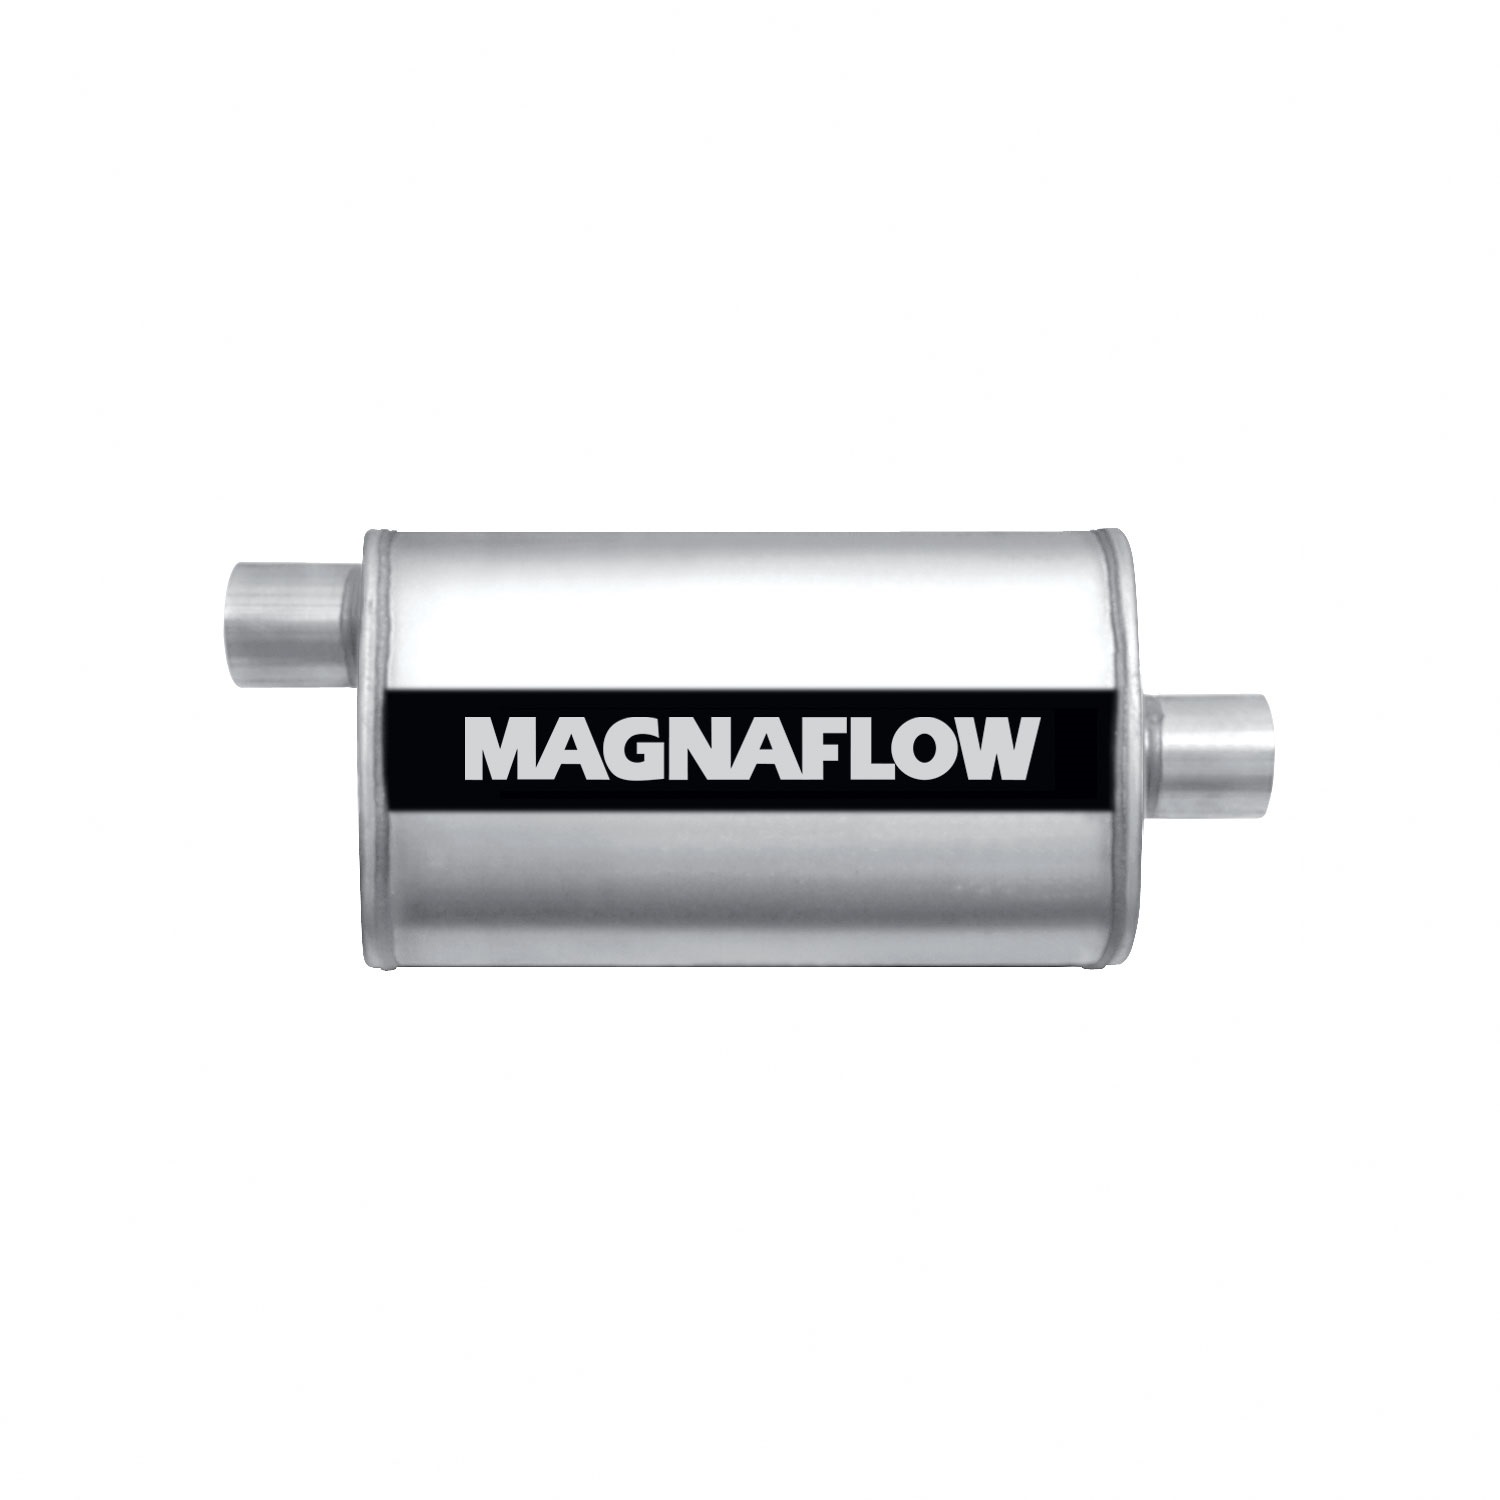 Magnaflow Performance Exhaust Magnaflow Performance Exhaust 11229 Stainless Steel Muffler